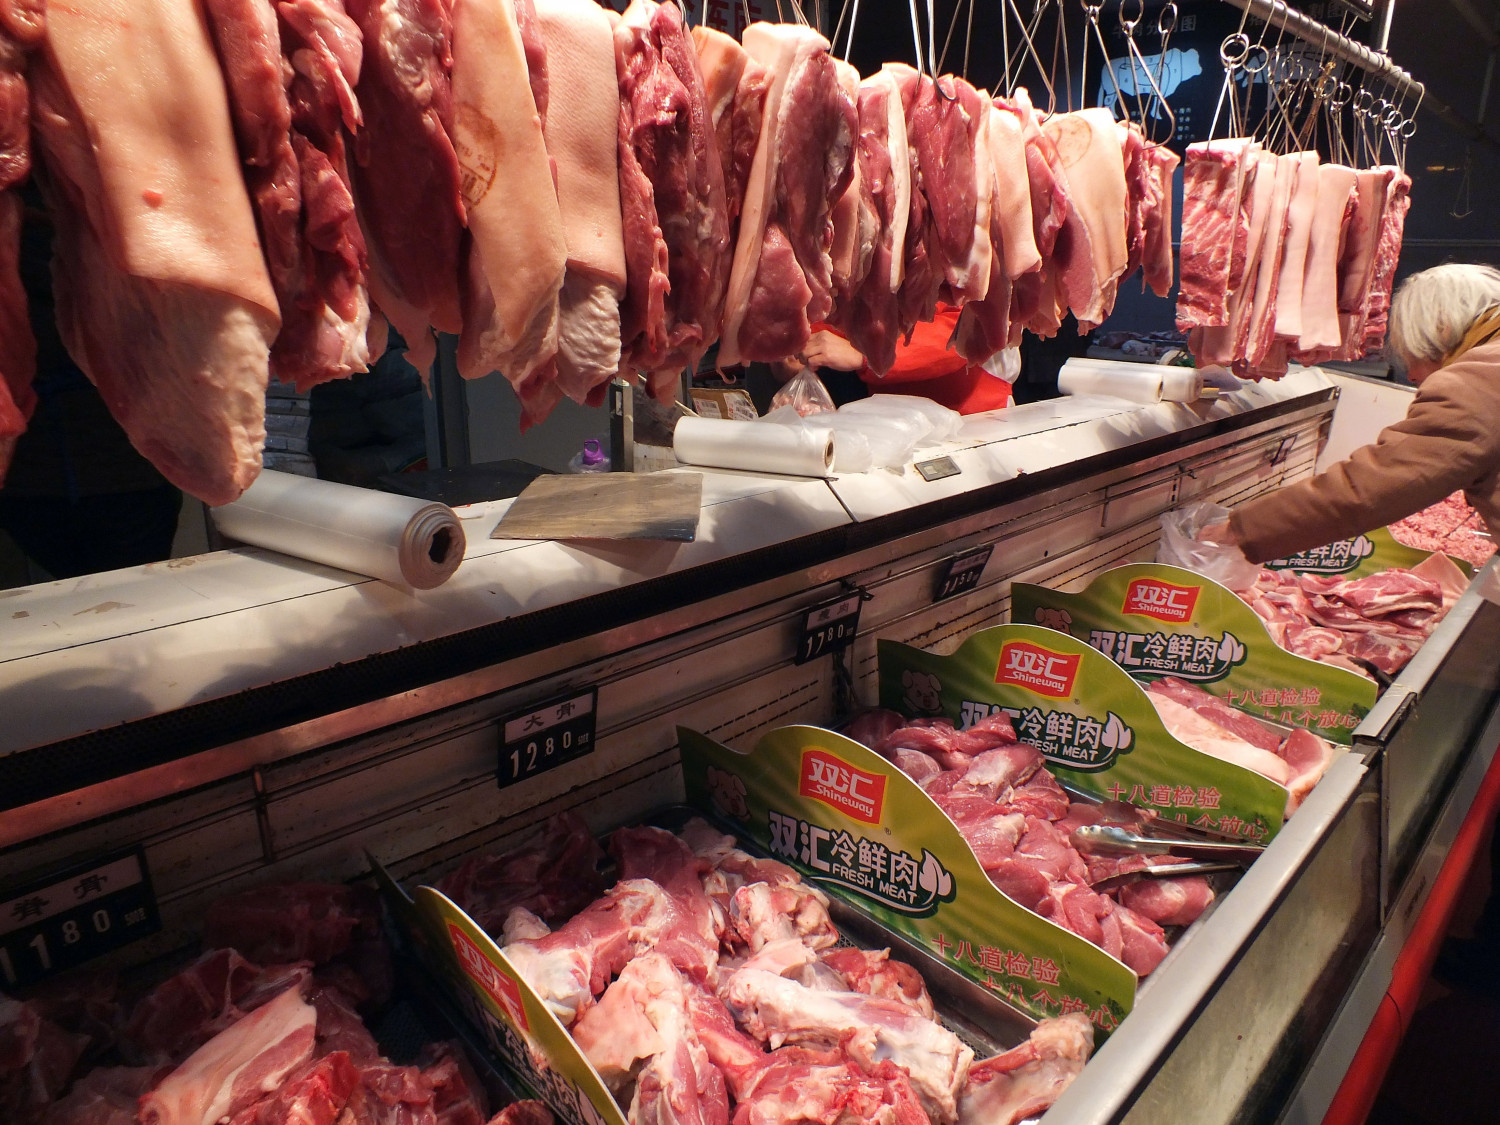 pork-products-on-chinese-market-shelf